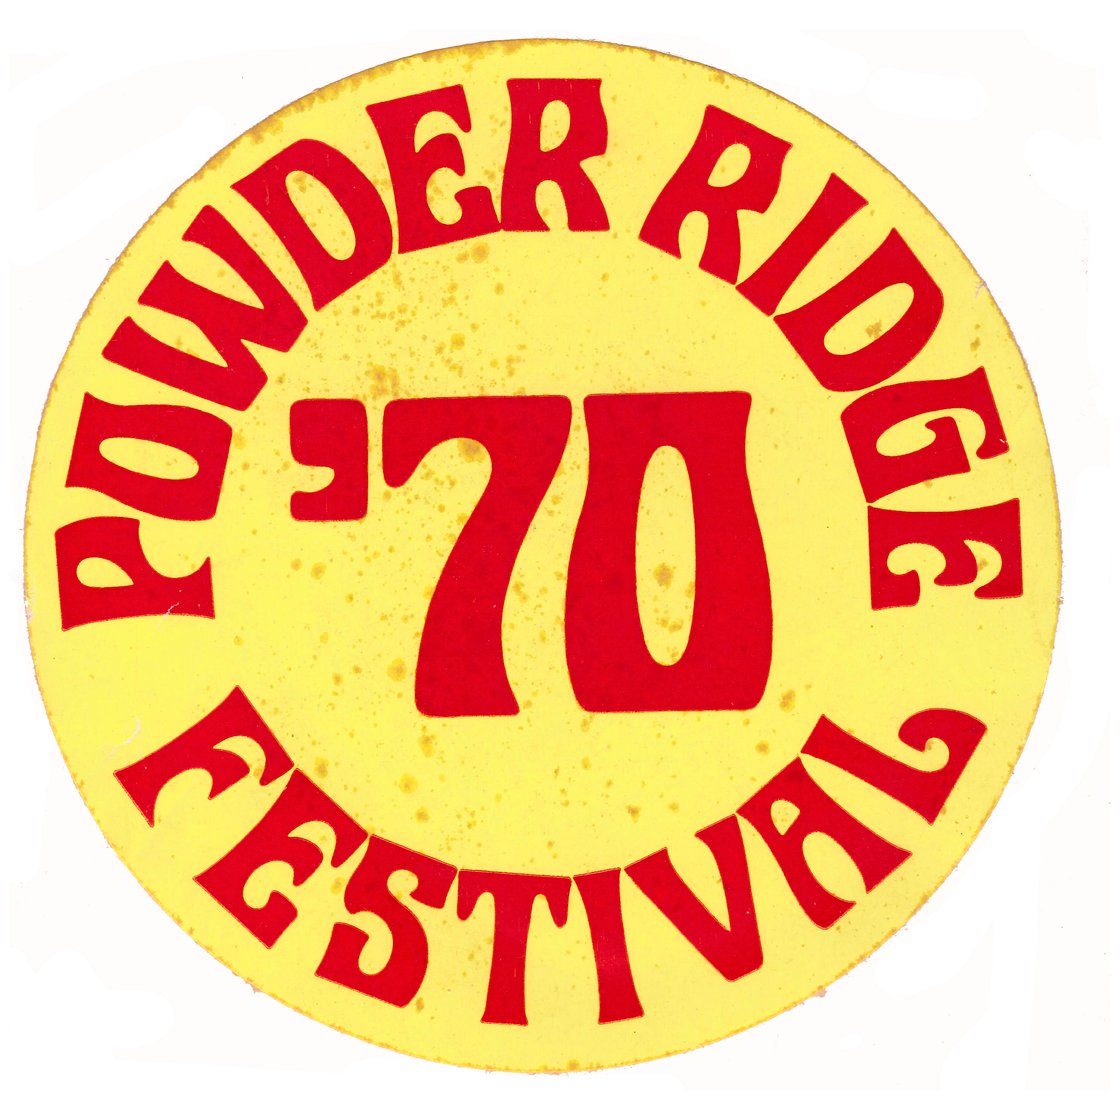 Image of Powder Ridge documentary sticker